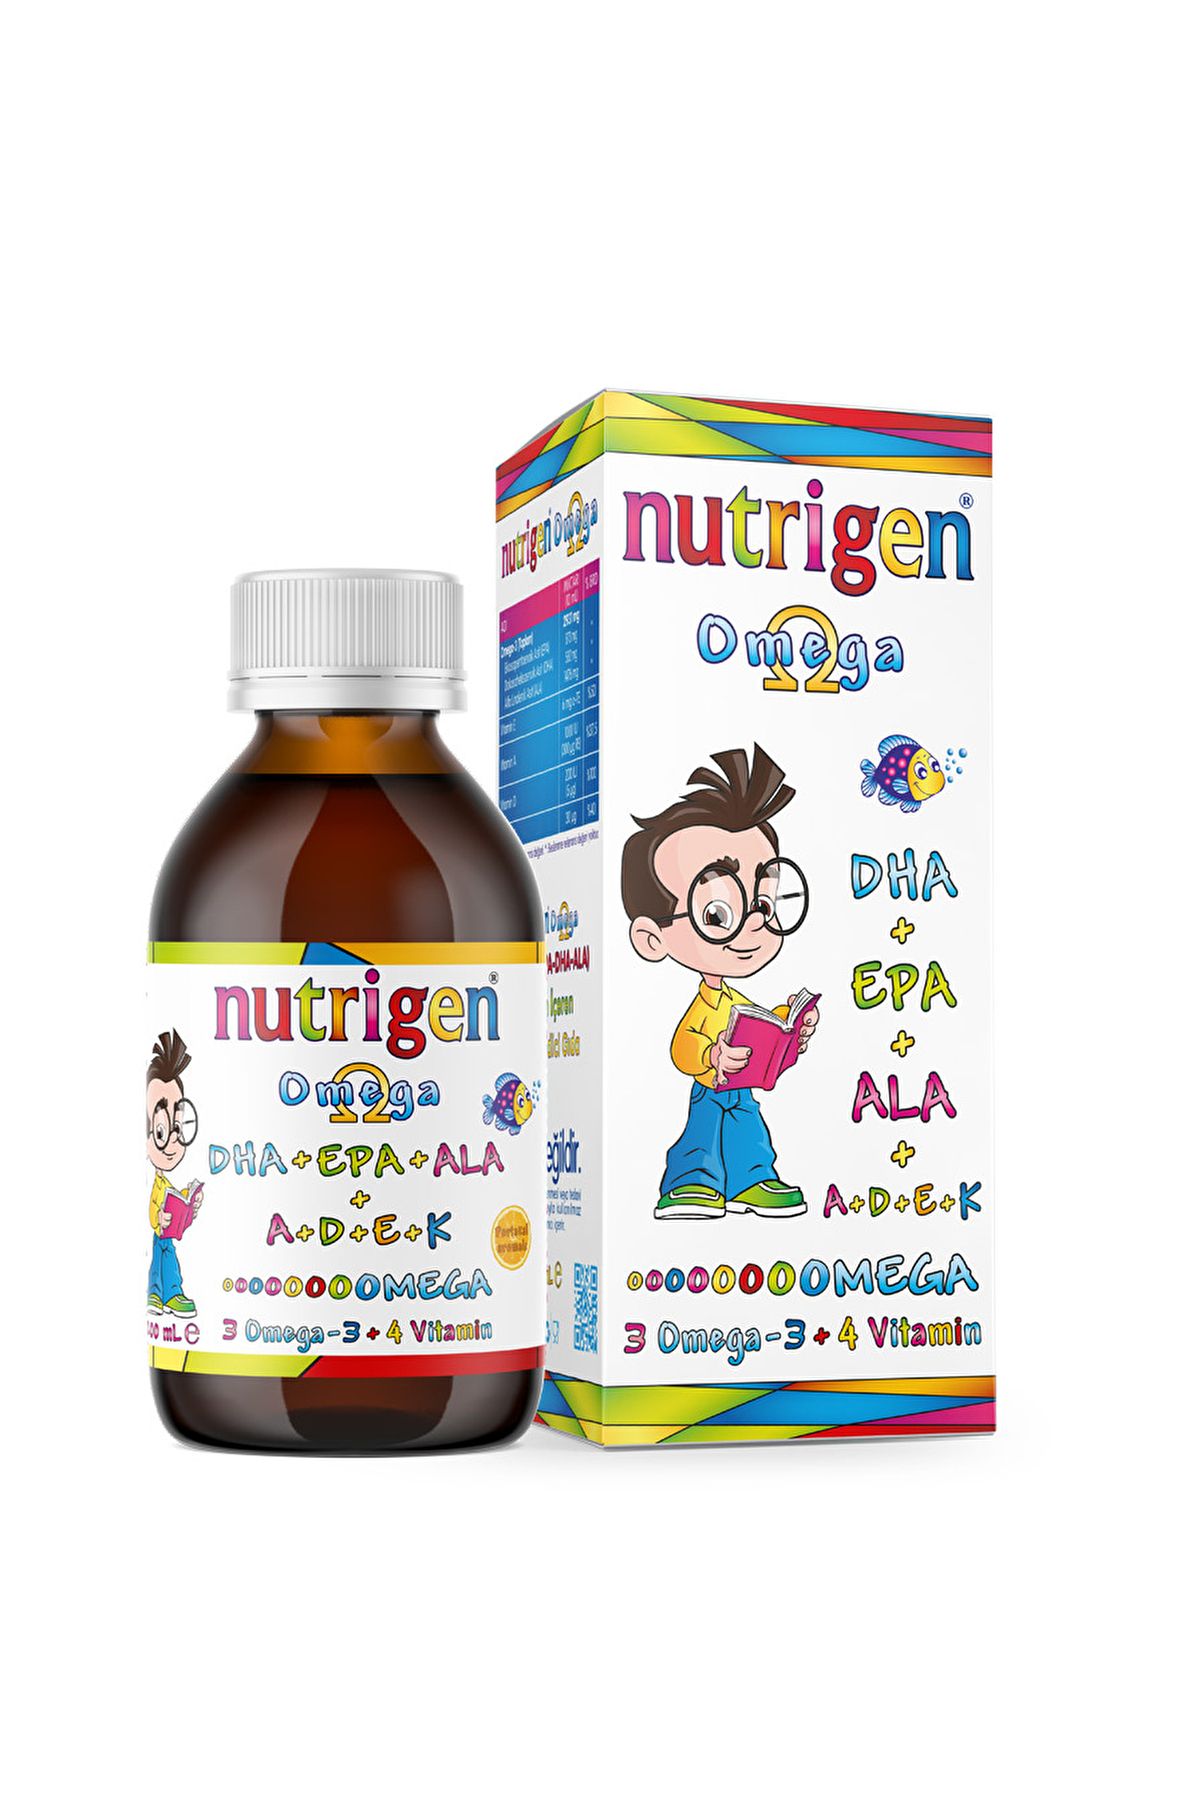 Nutrigen Omega 3 Şurup 200 ml